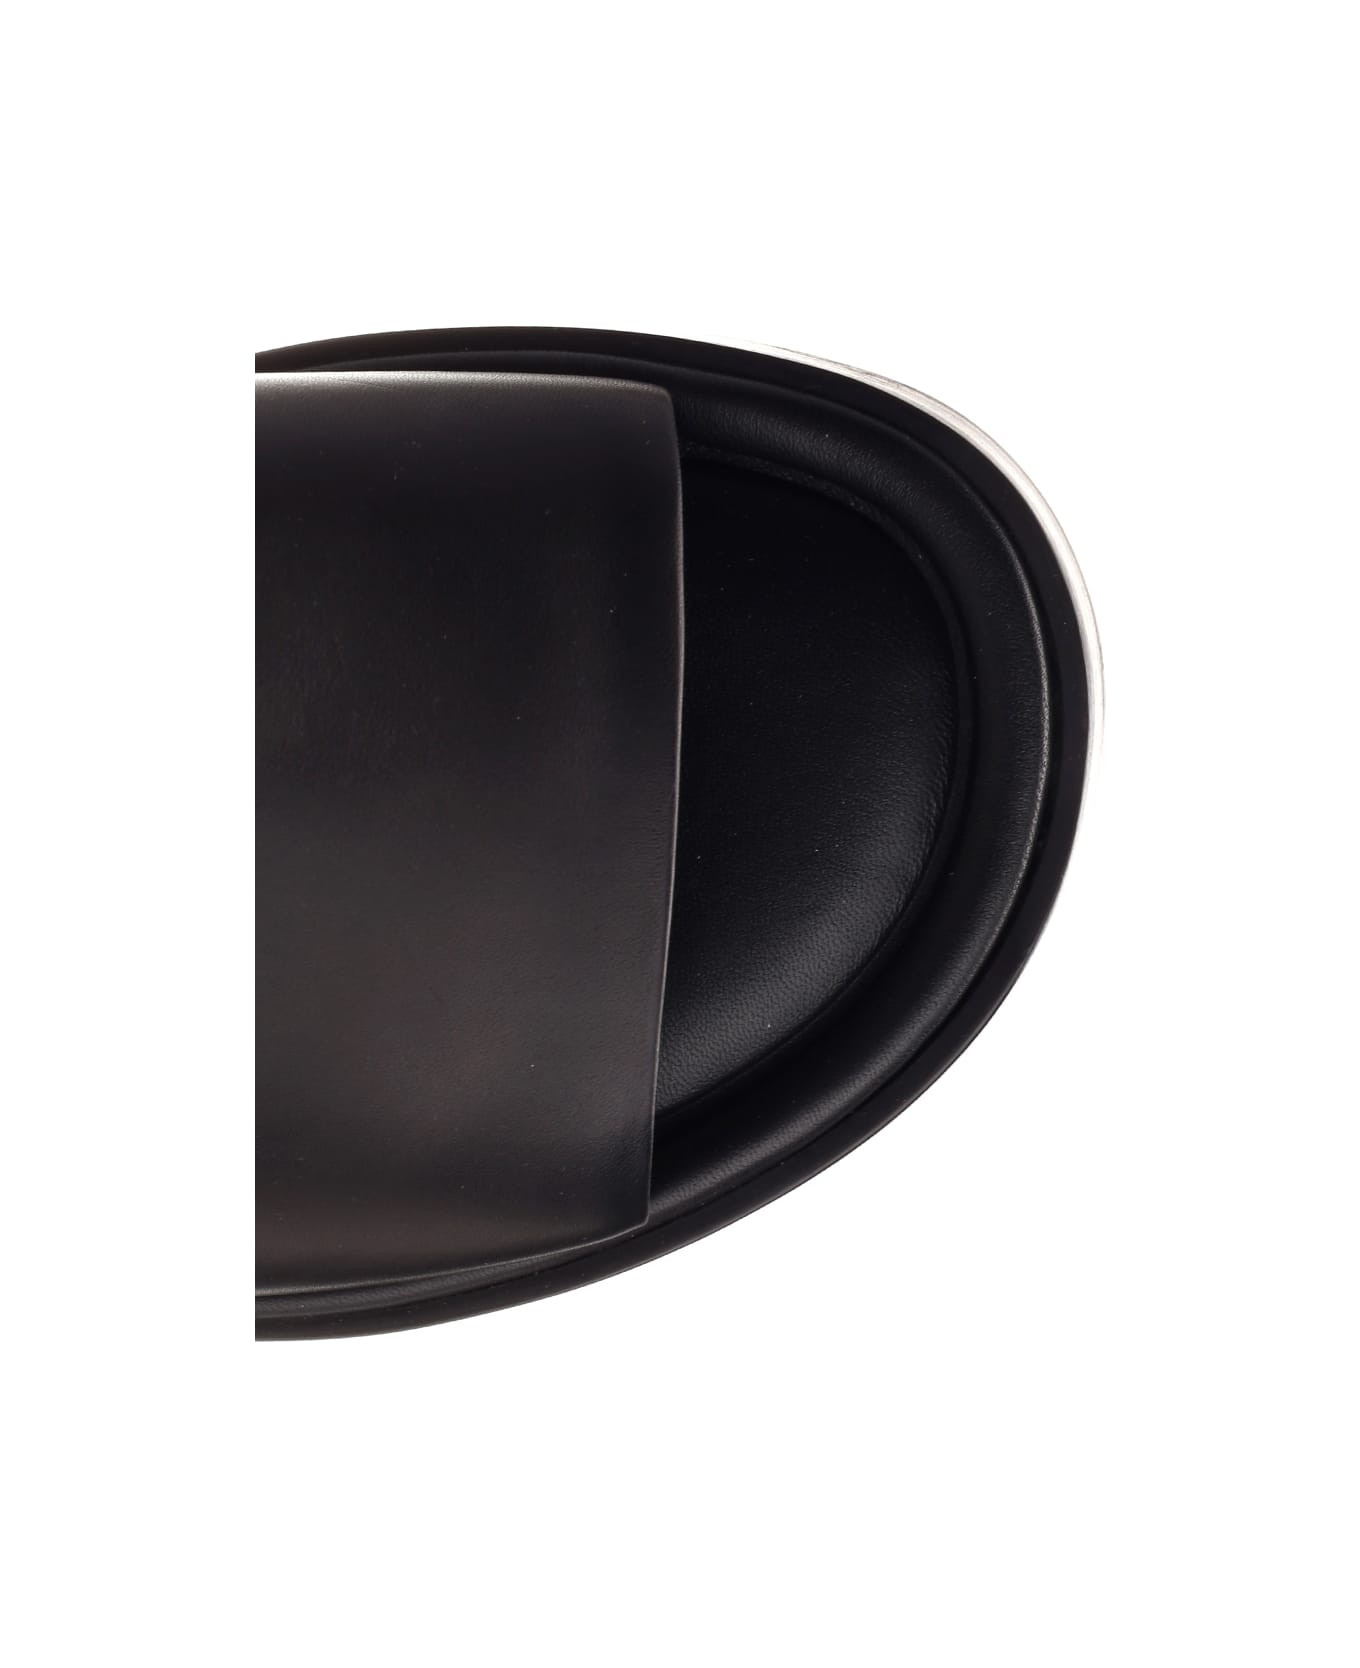 Ferragamo Flat Sandal In Black Leather - Black